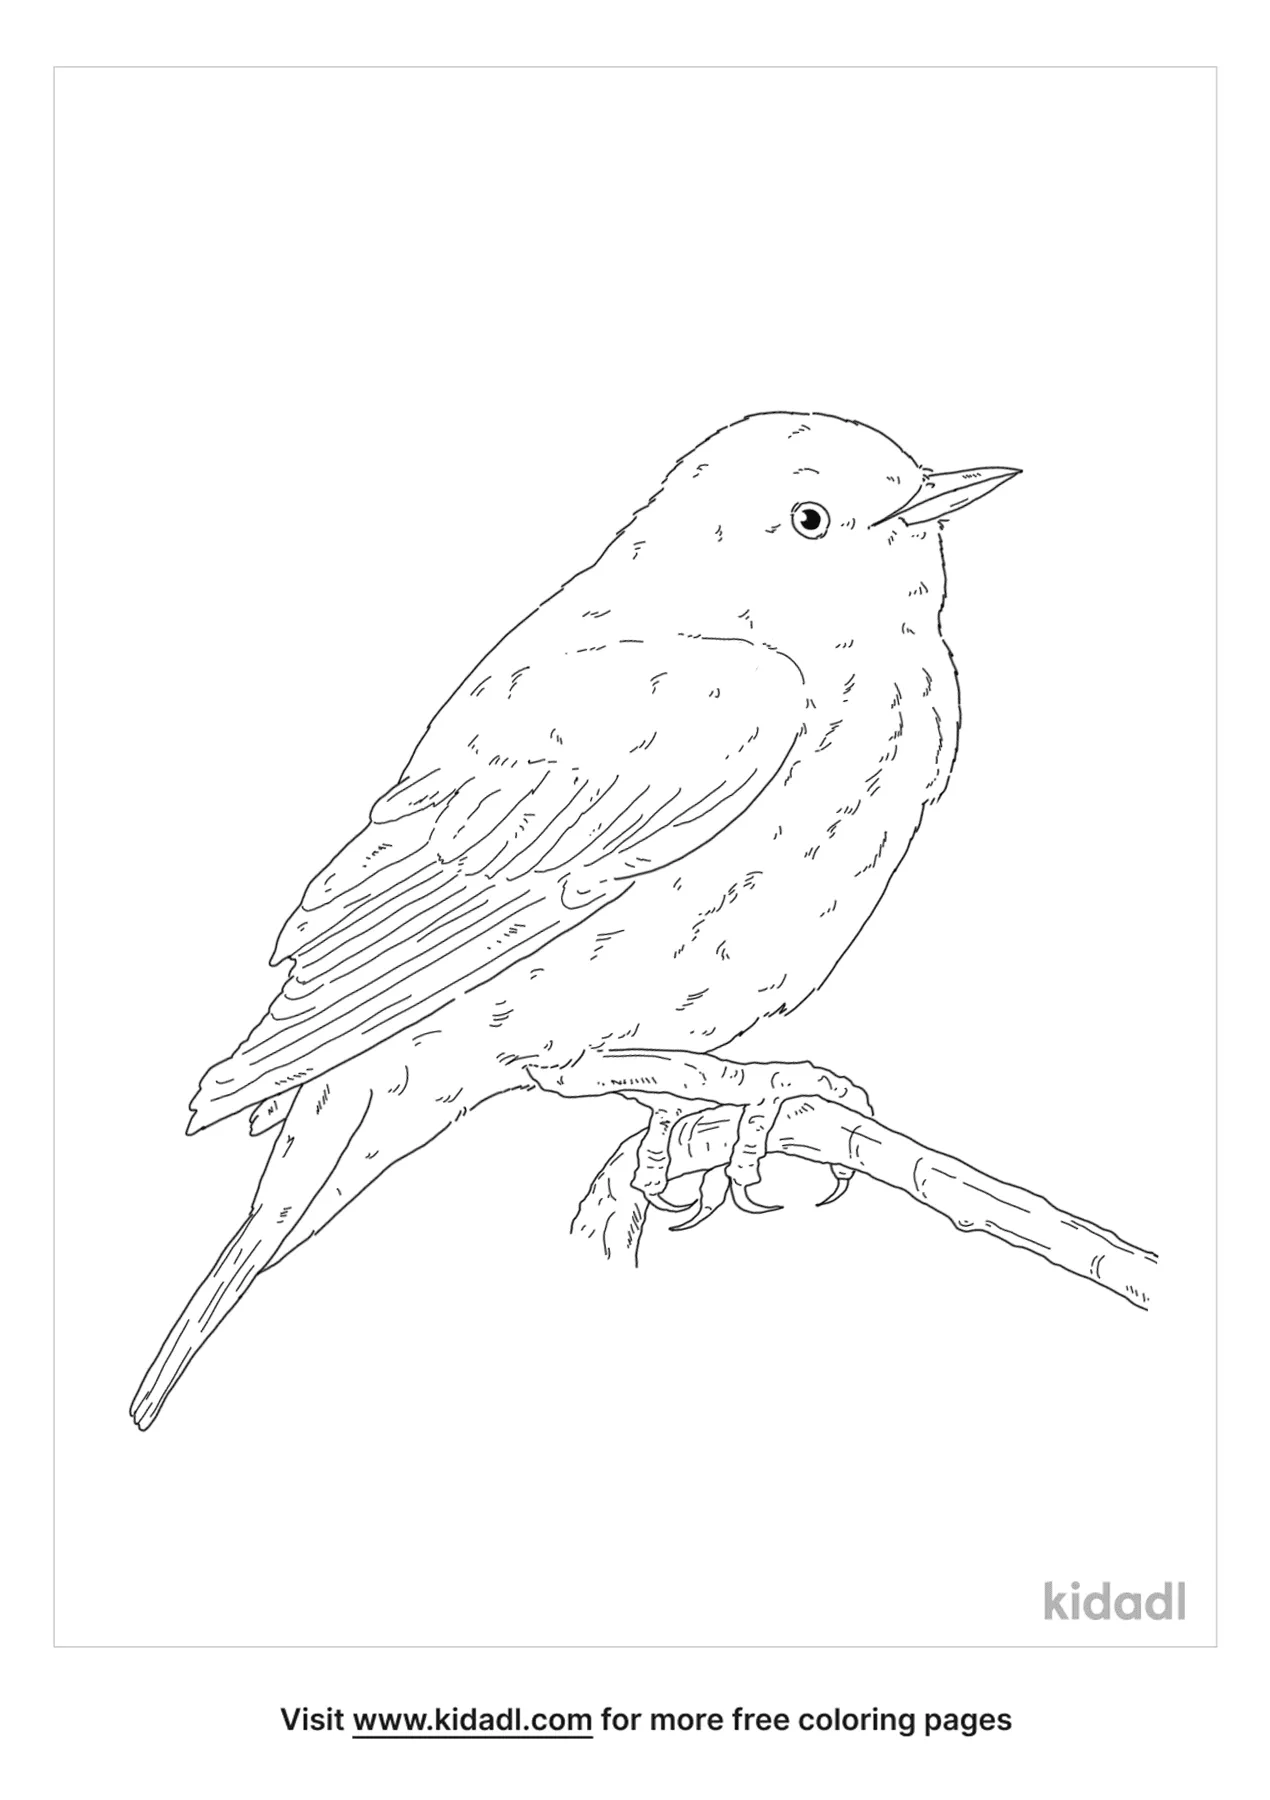 Pine Warbler Coloring Page | Free Birds Coloring Page | Kidadl